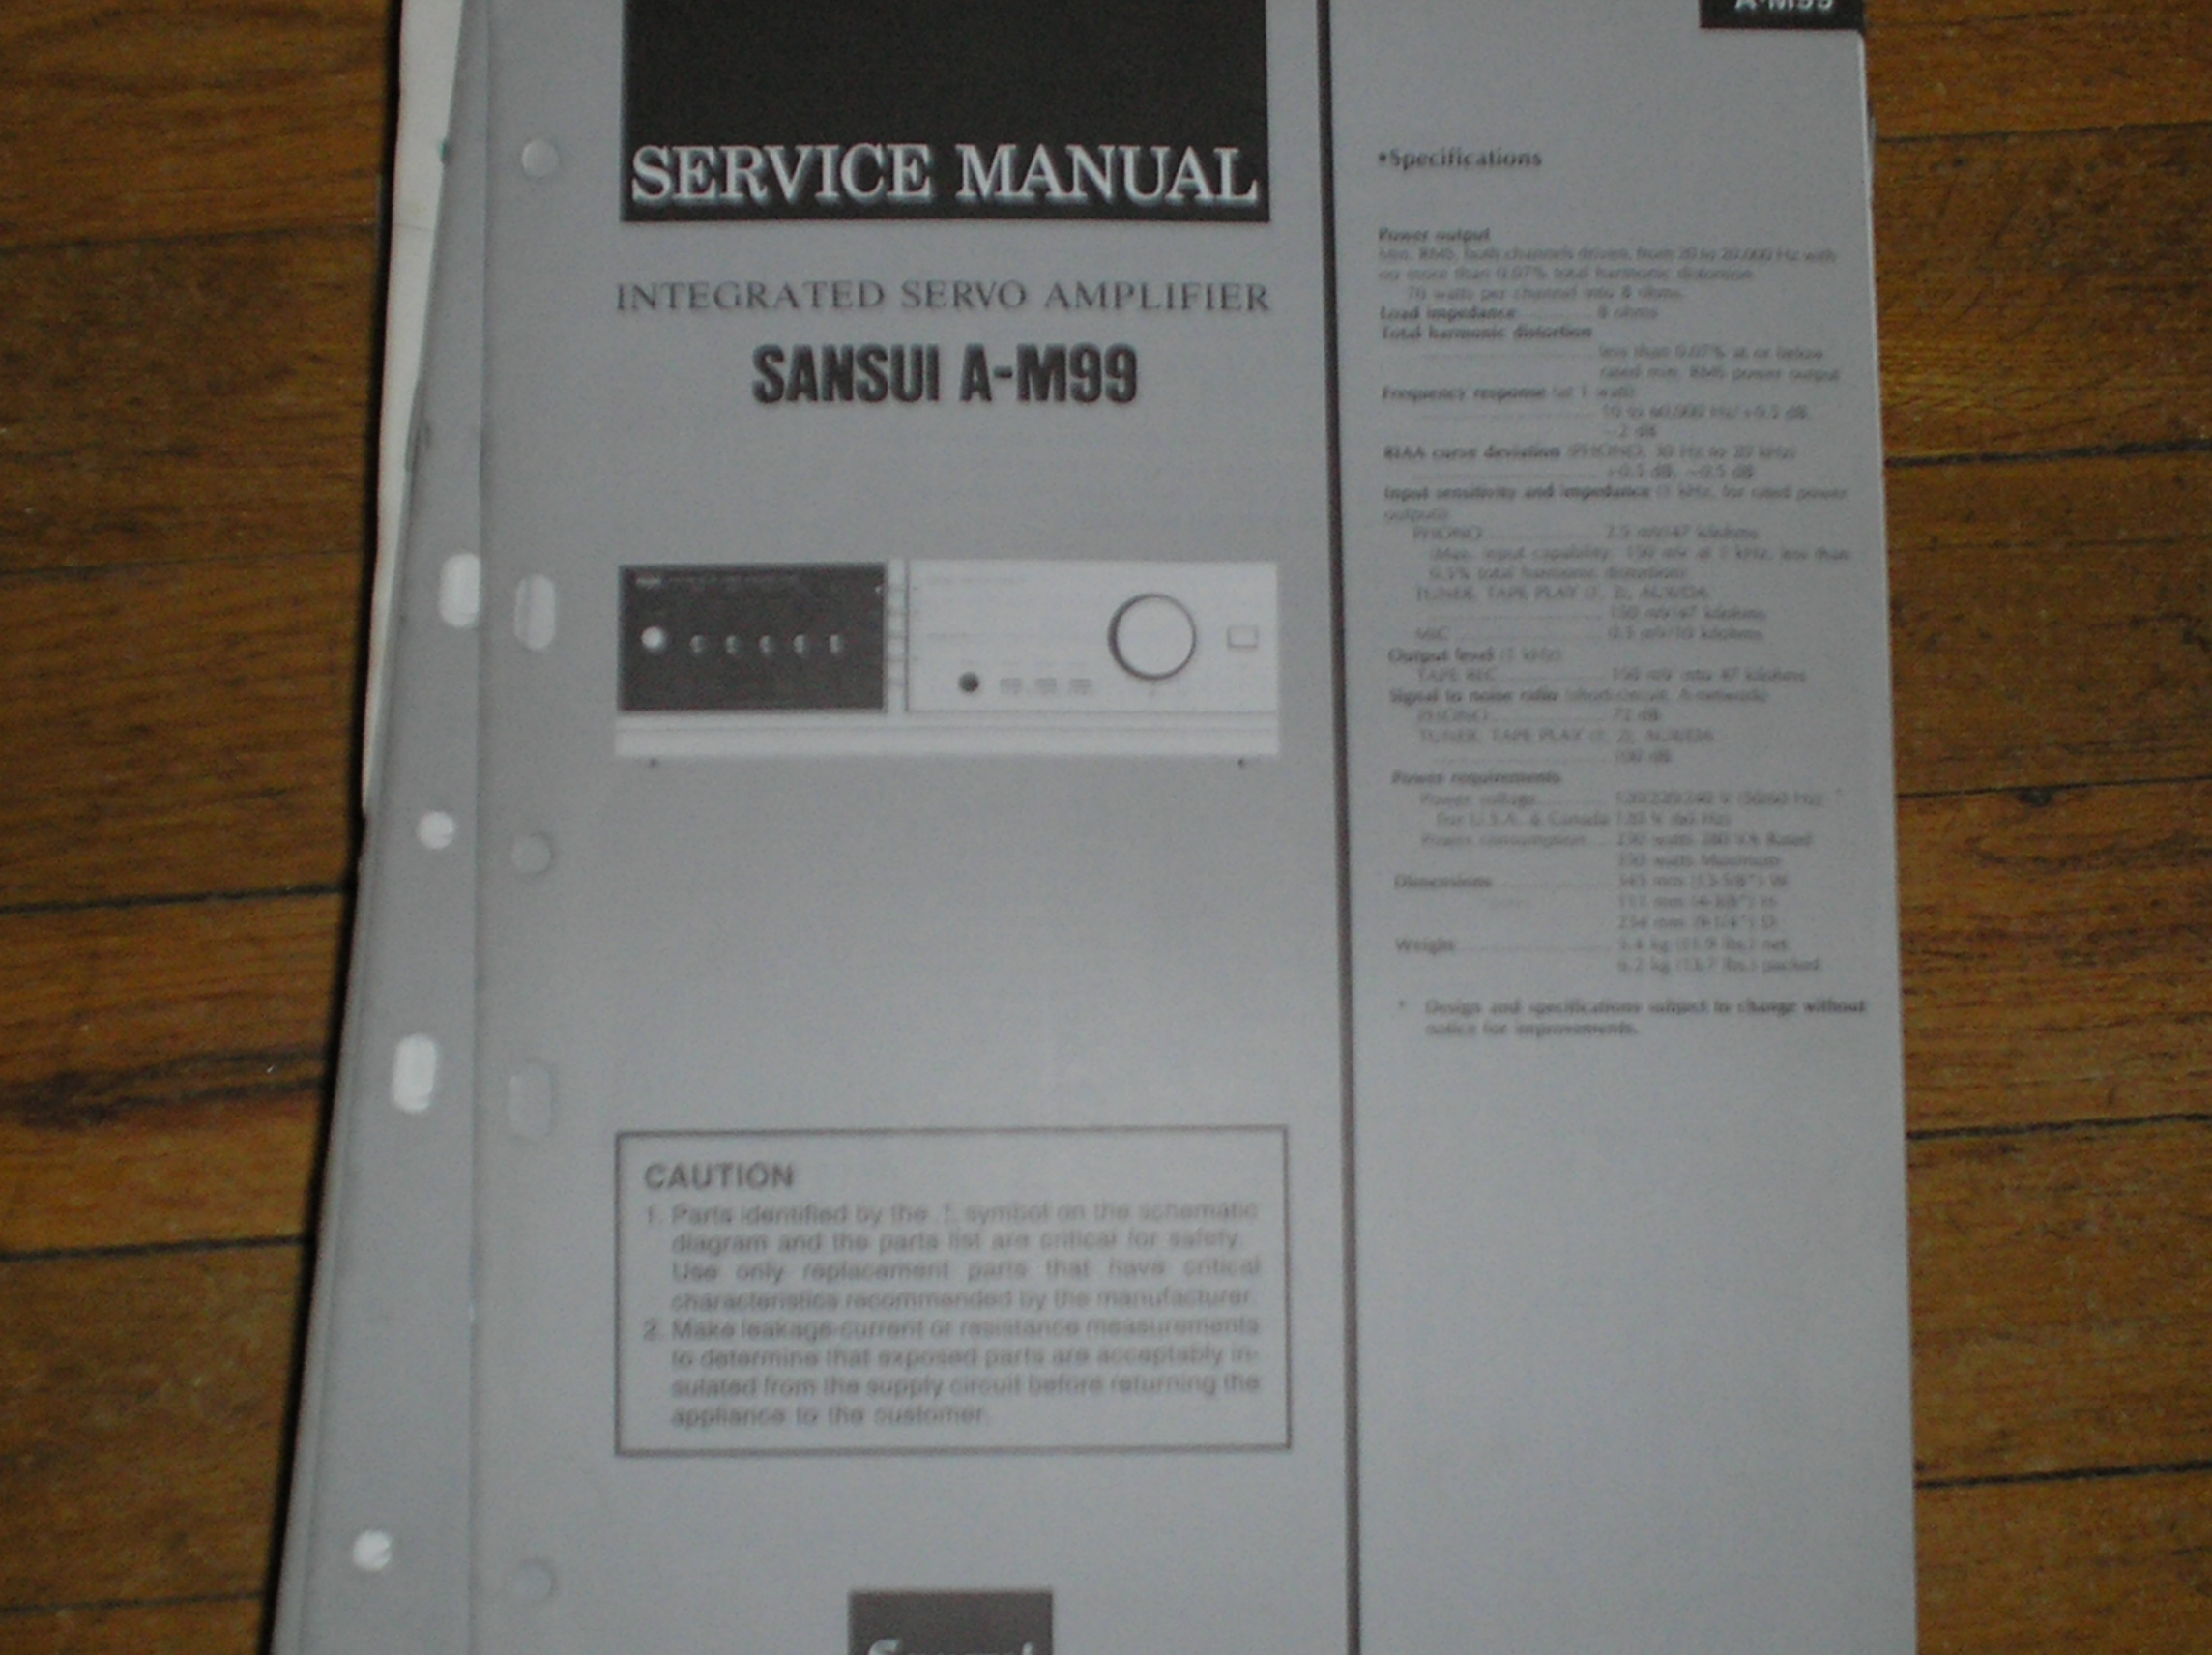 A-M99 Amplifier Service Manual